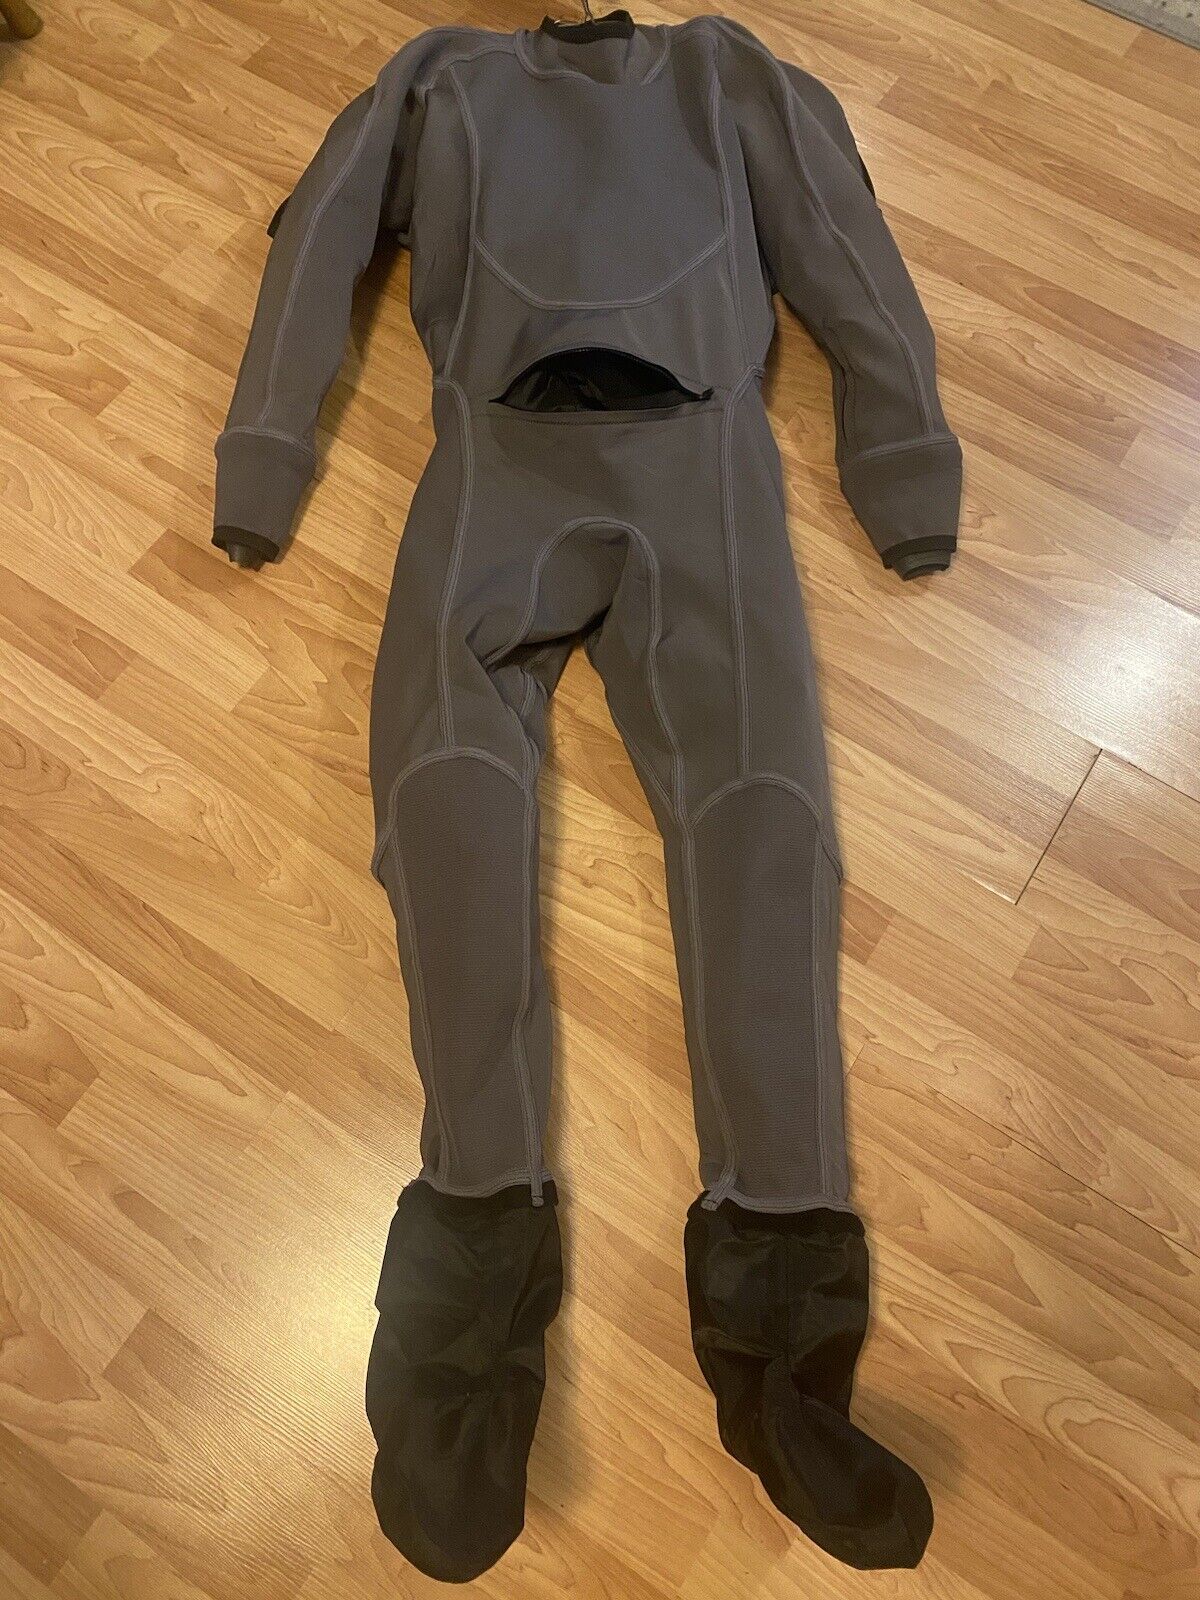 AQUALUNG Tactical One Dry Suit L/XL